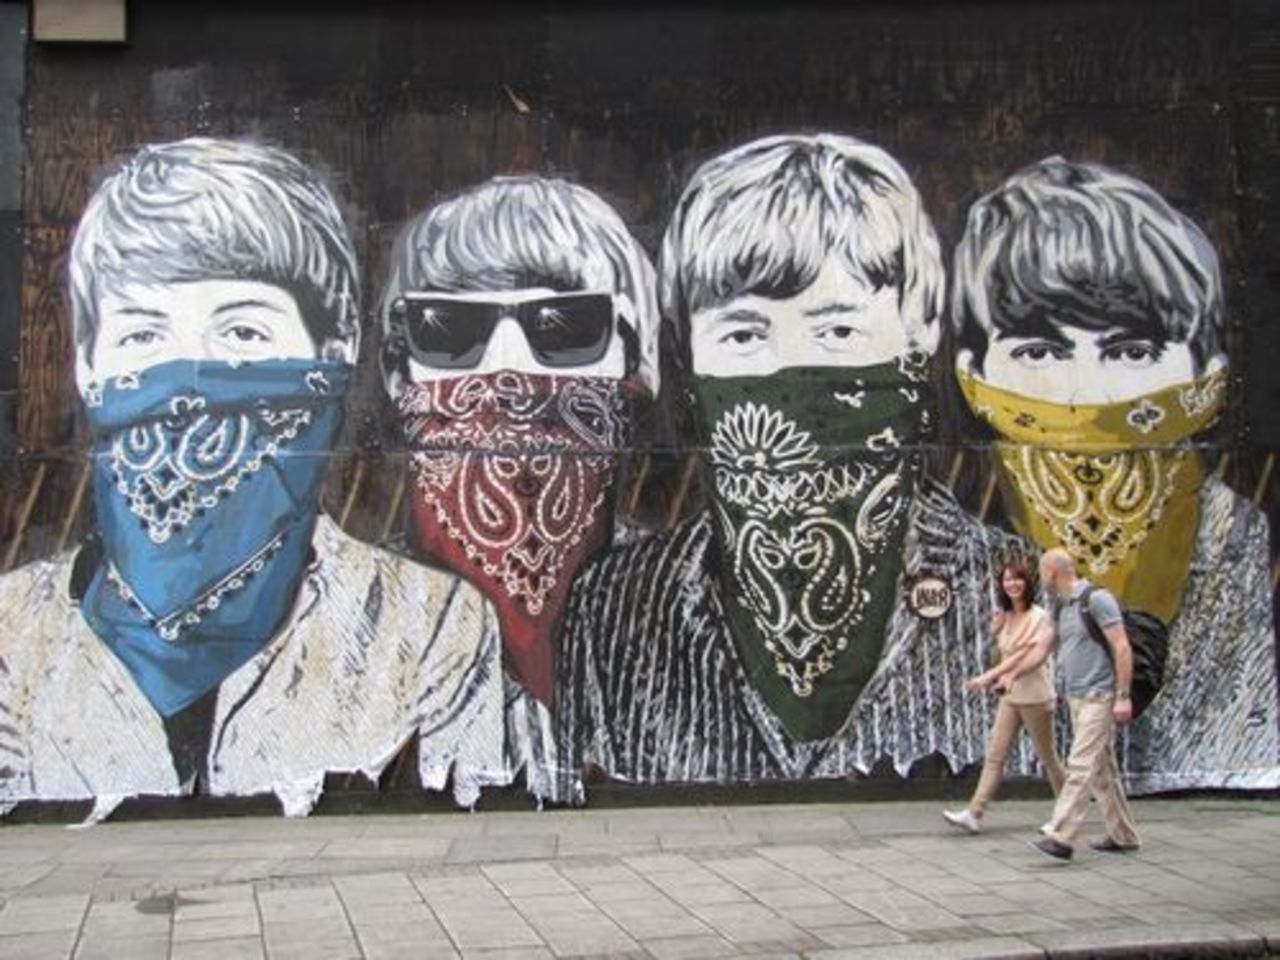 The #Beatles in #Thuglife#Streetart of Mr. Brainwash#Art #Graffiti #London #England https://t.co/ydJDiElVK2